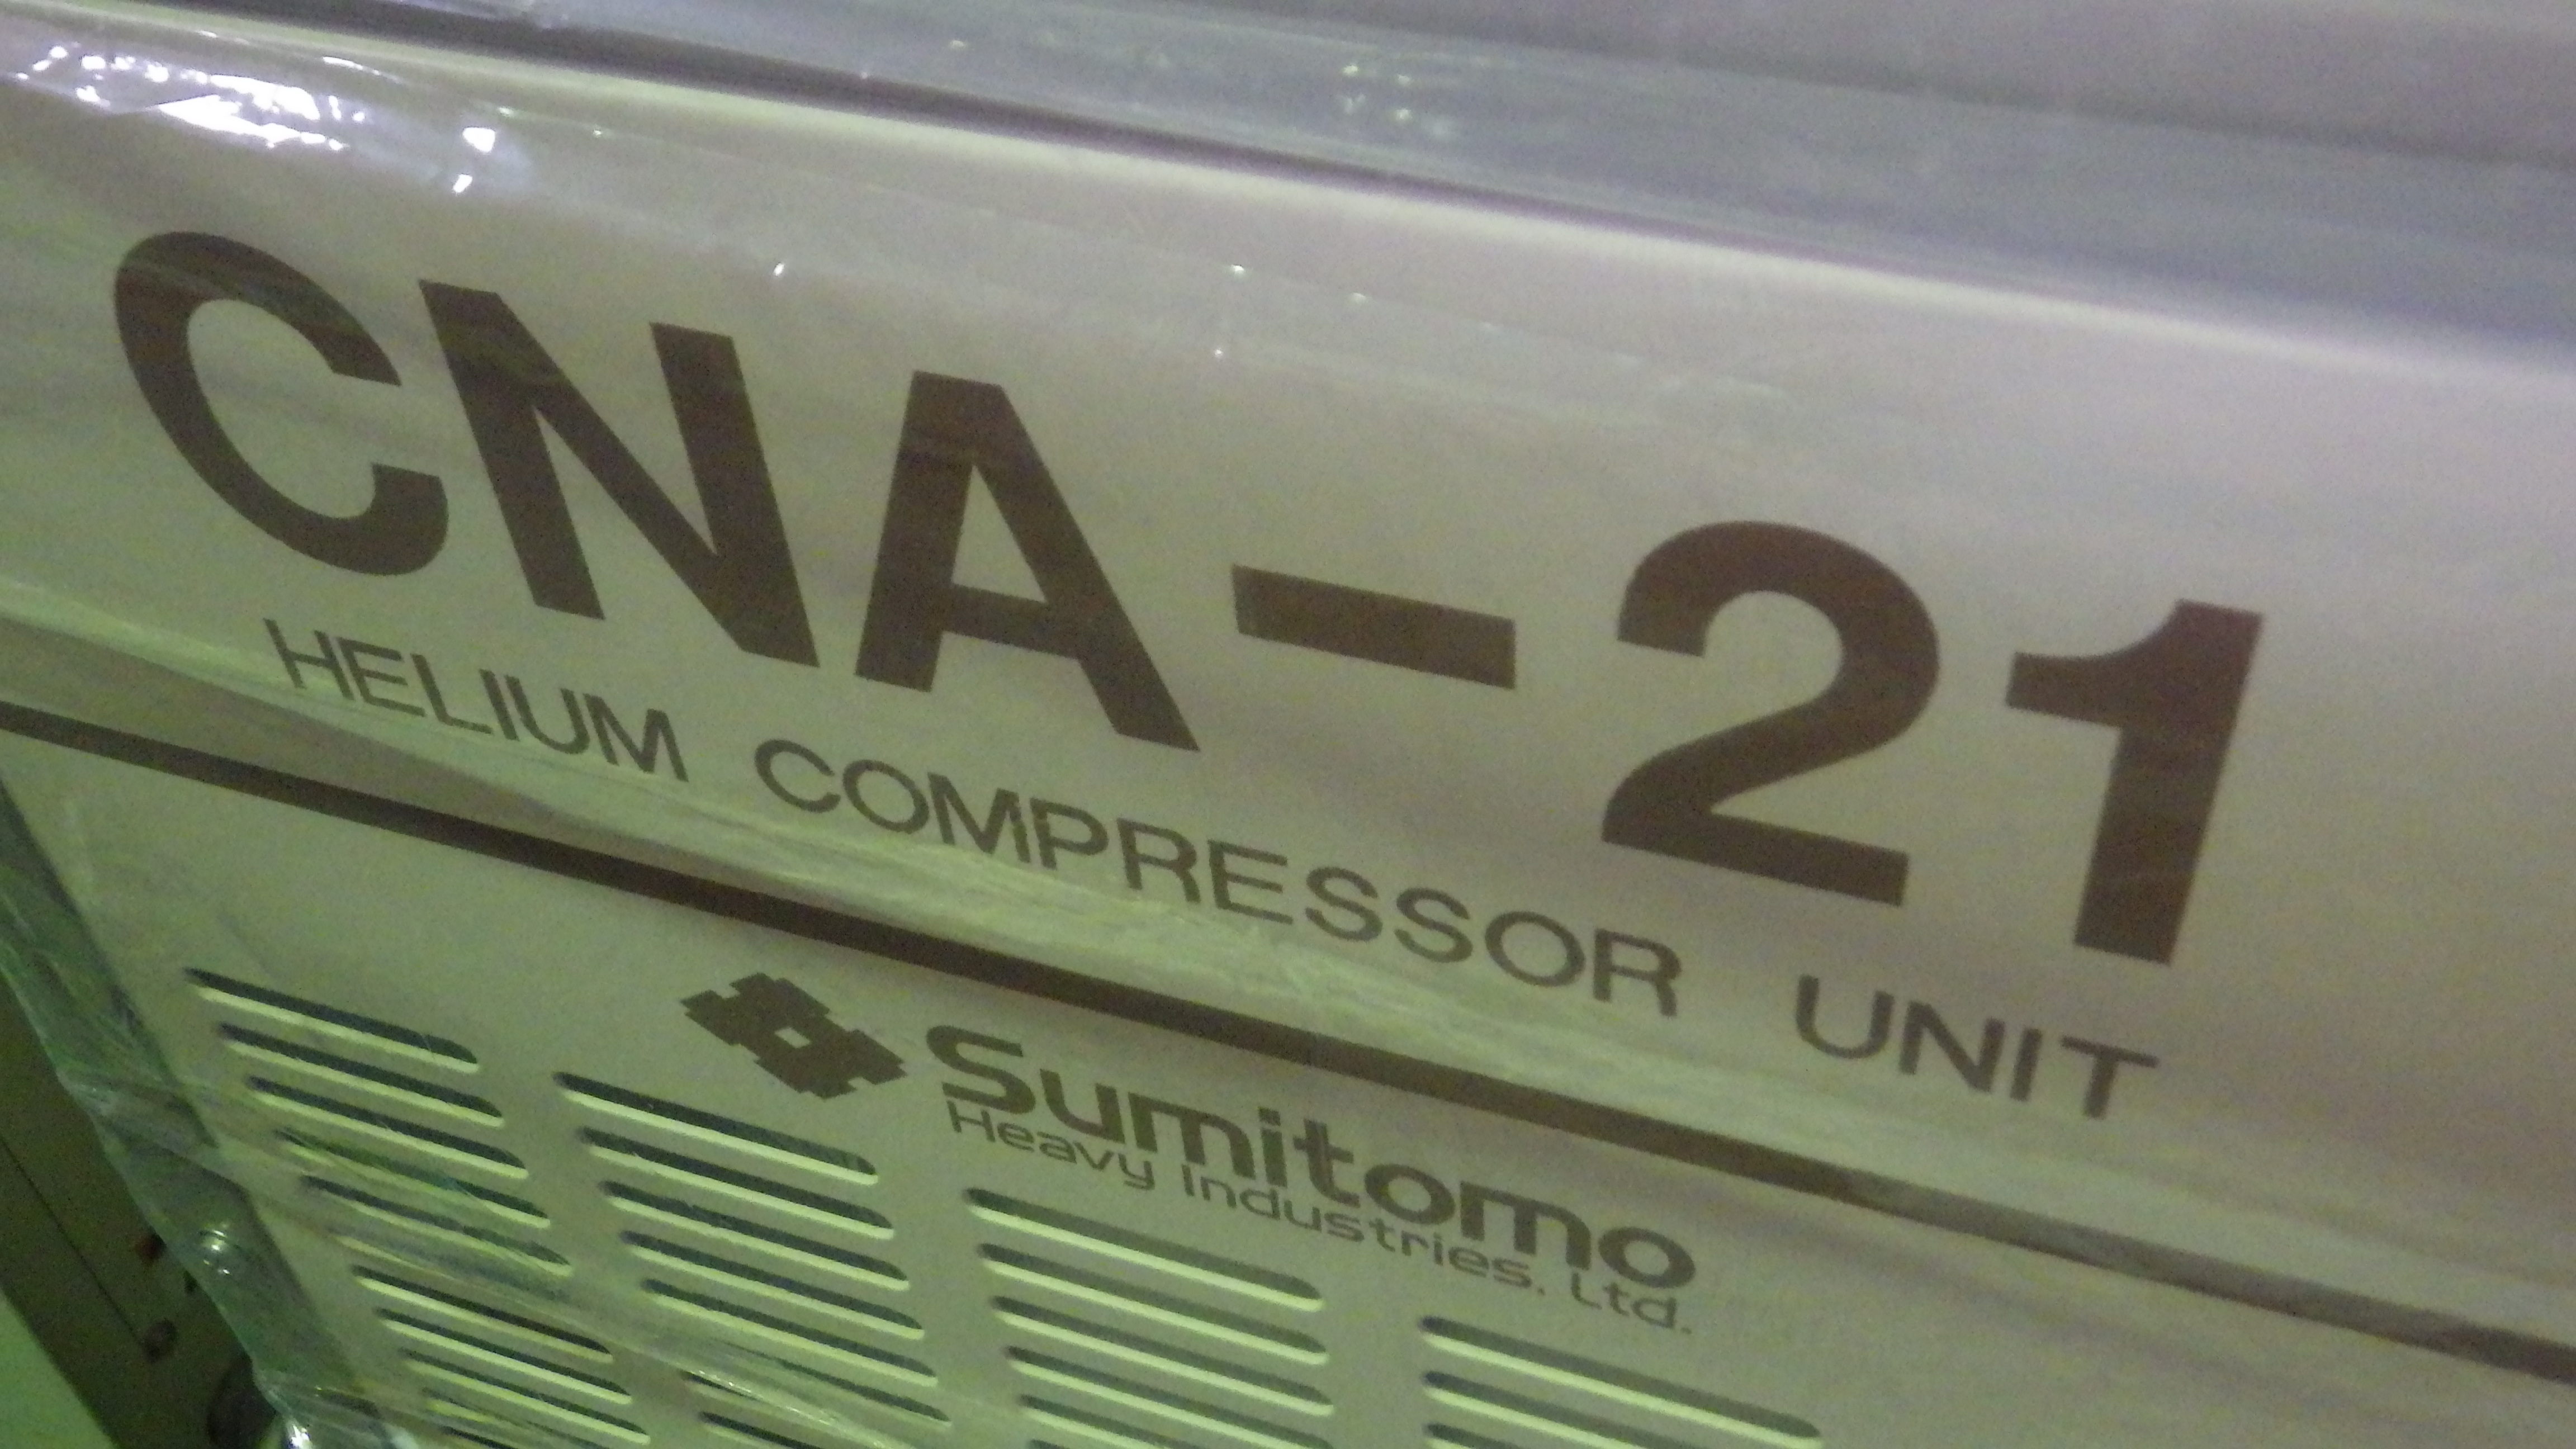 CNA-21Aの名盤写真